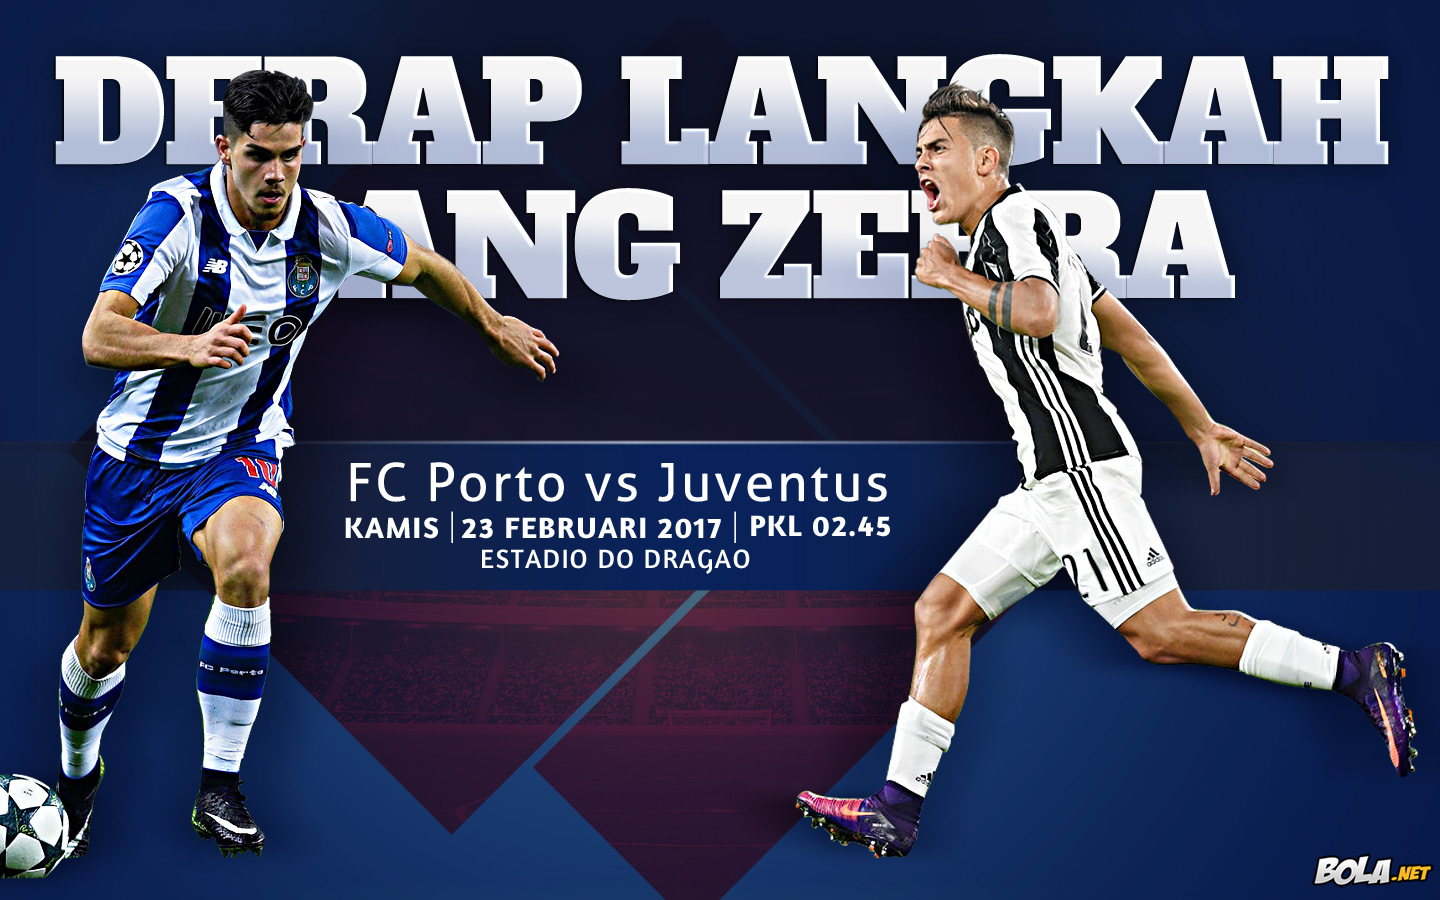 Deskripsi : Wallpaper Fc Porto Vs Juventus, size: 1440x900